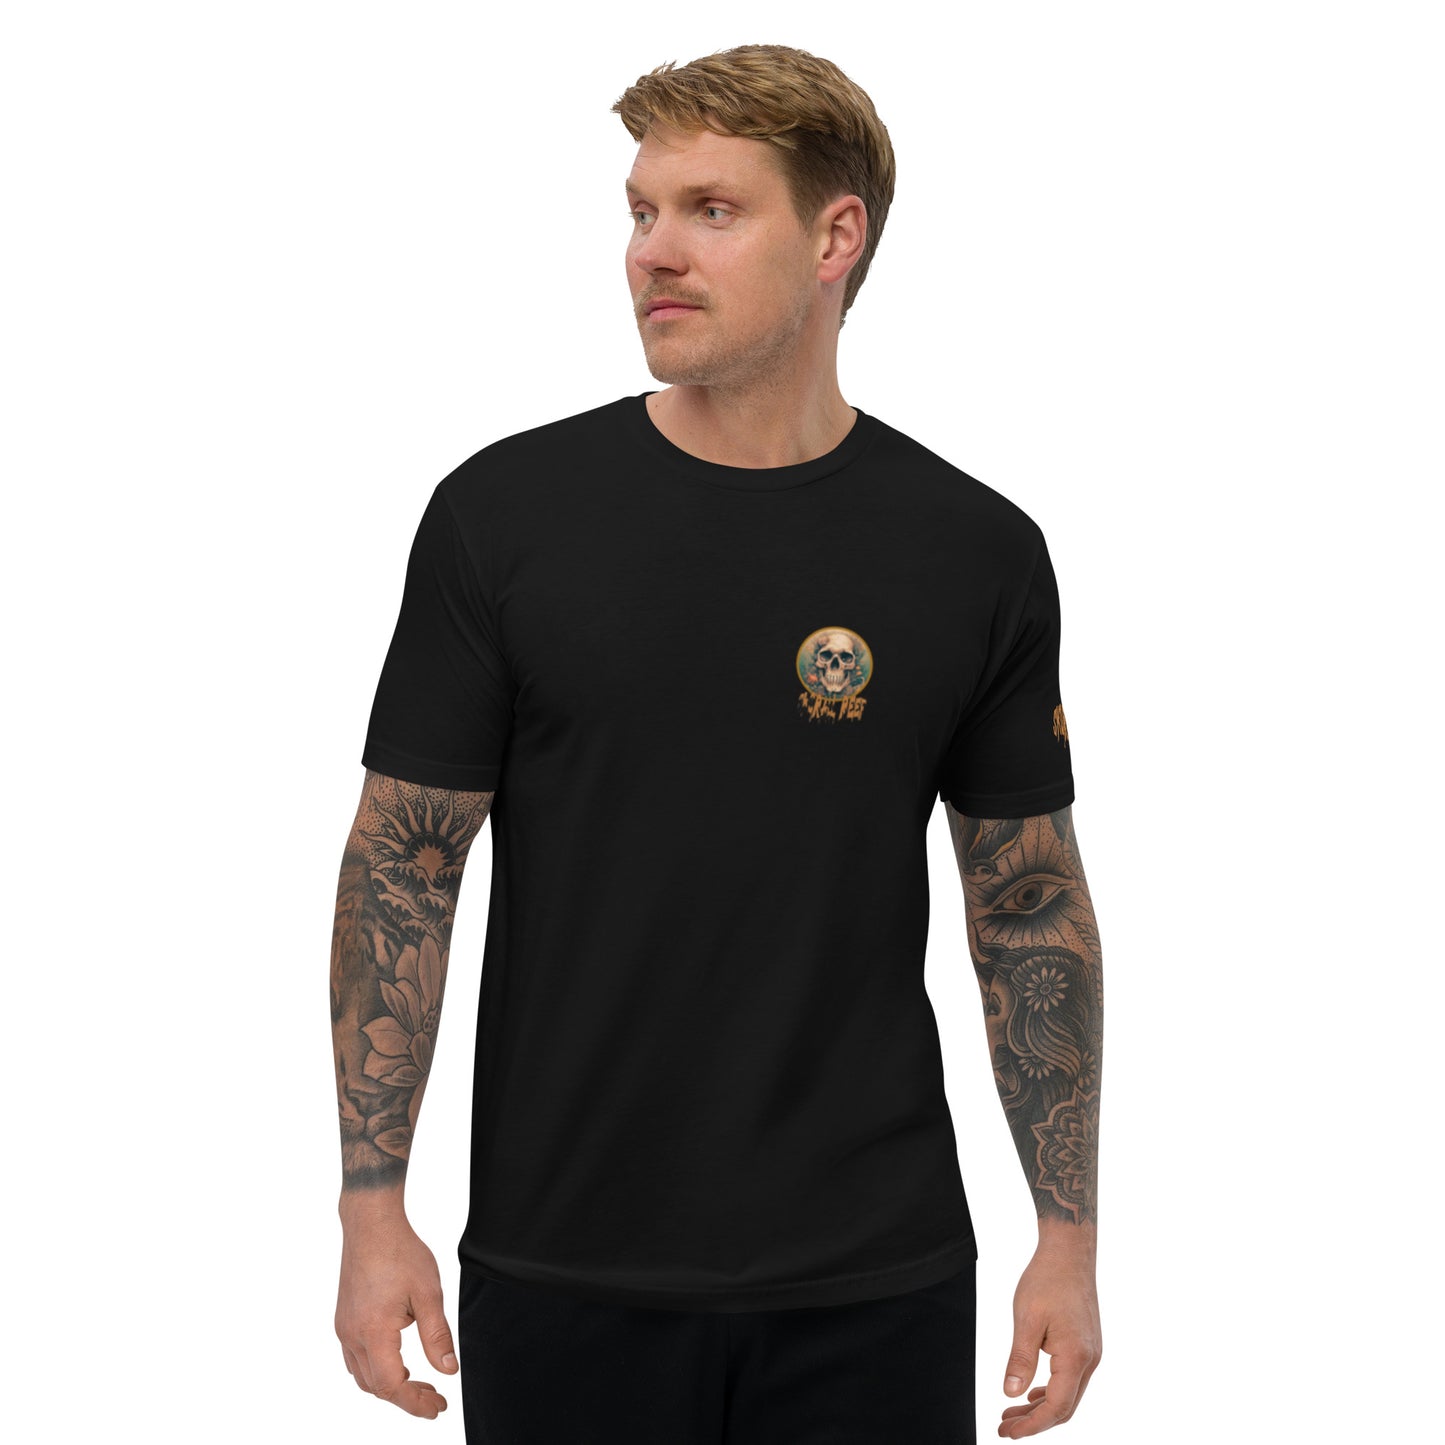 Skorall Reef S/S Men's Premium T-shirt